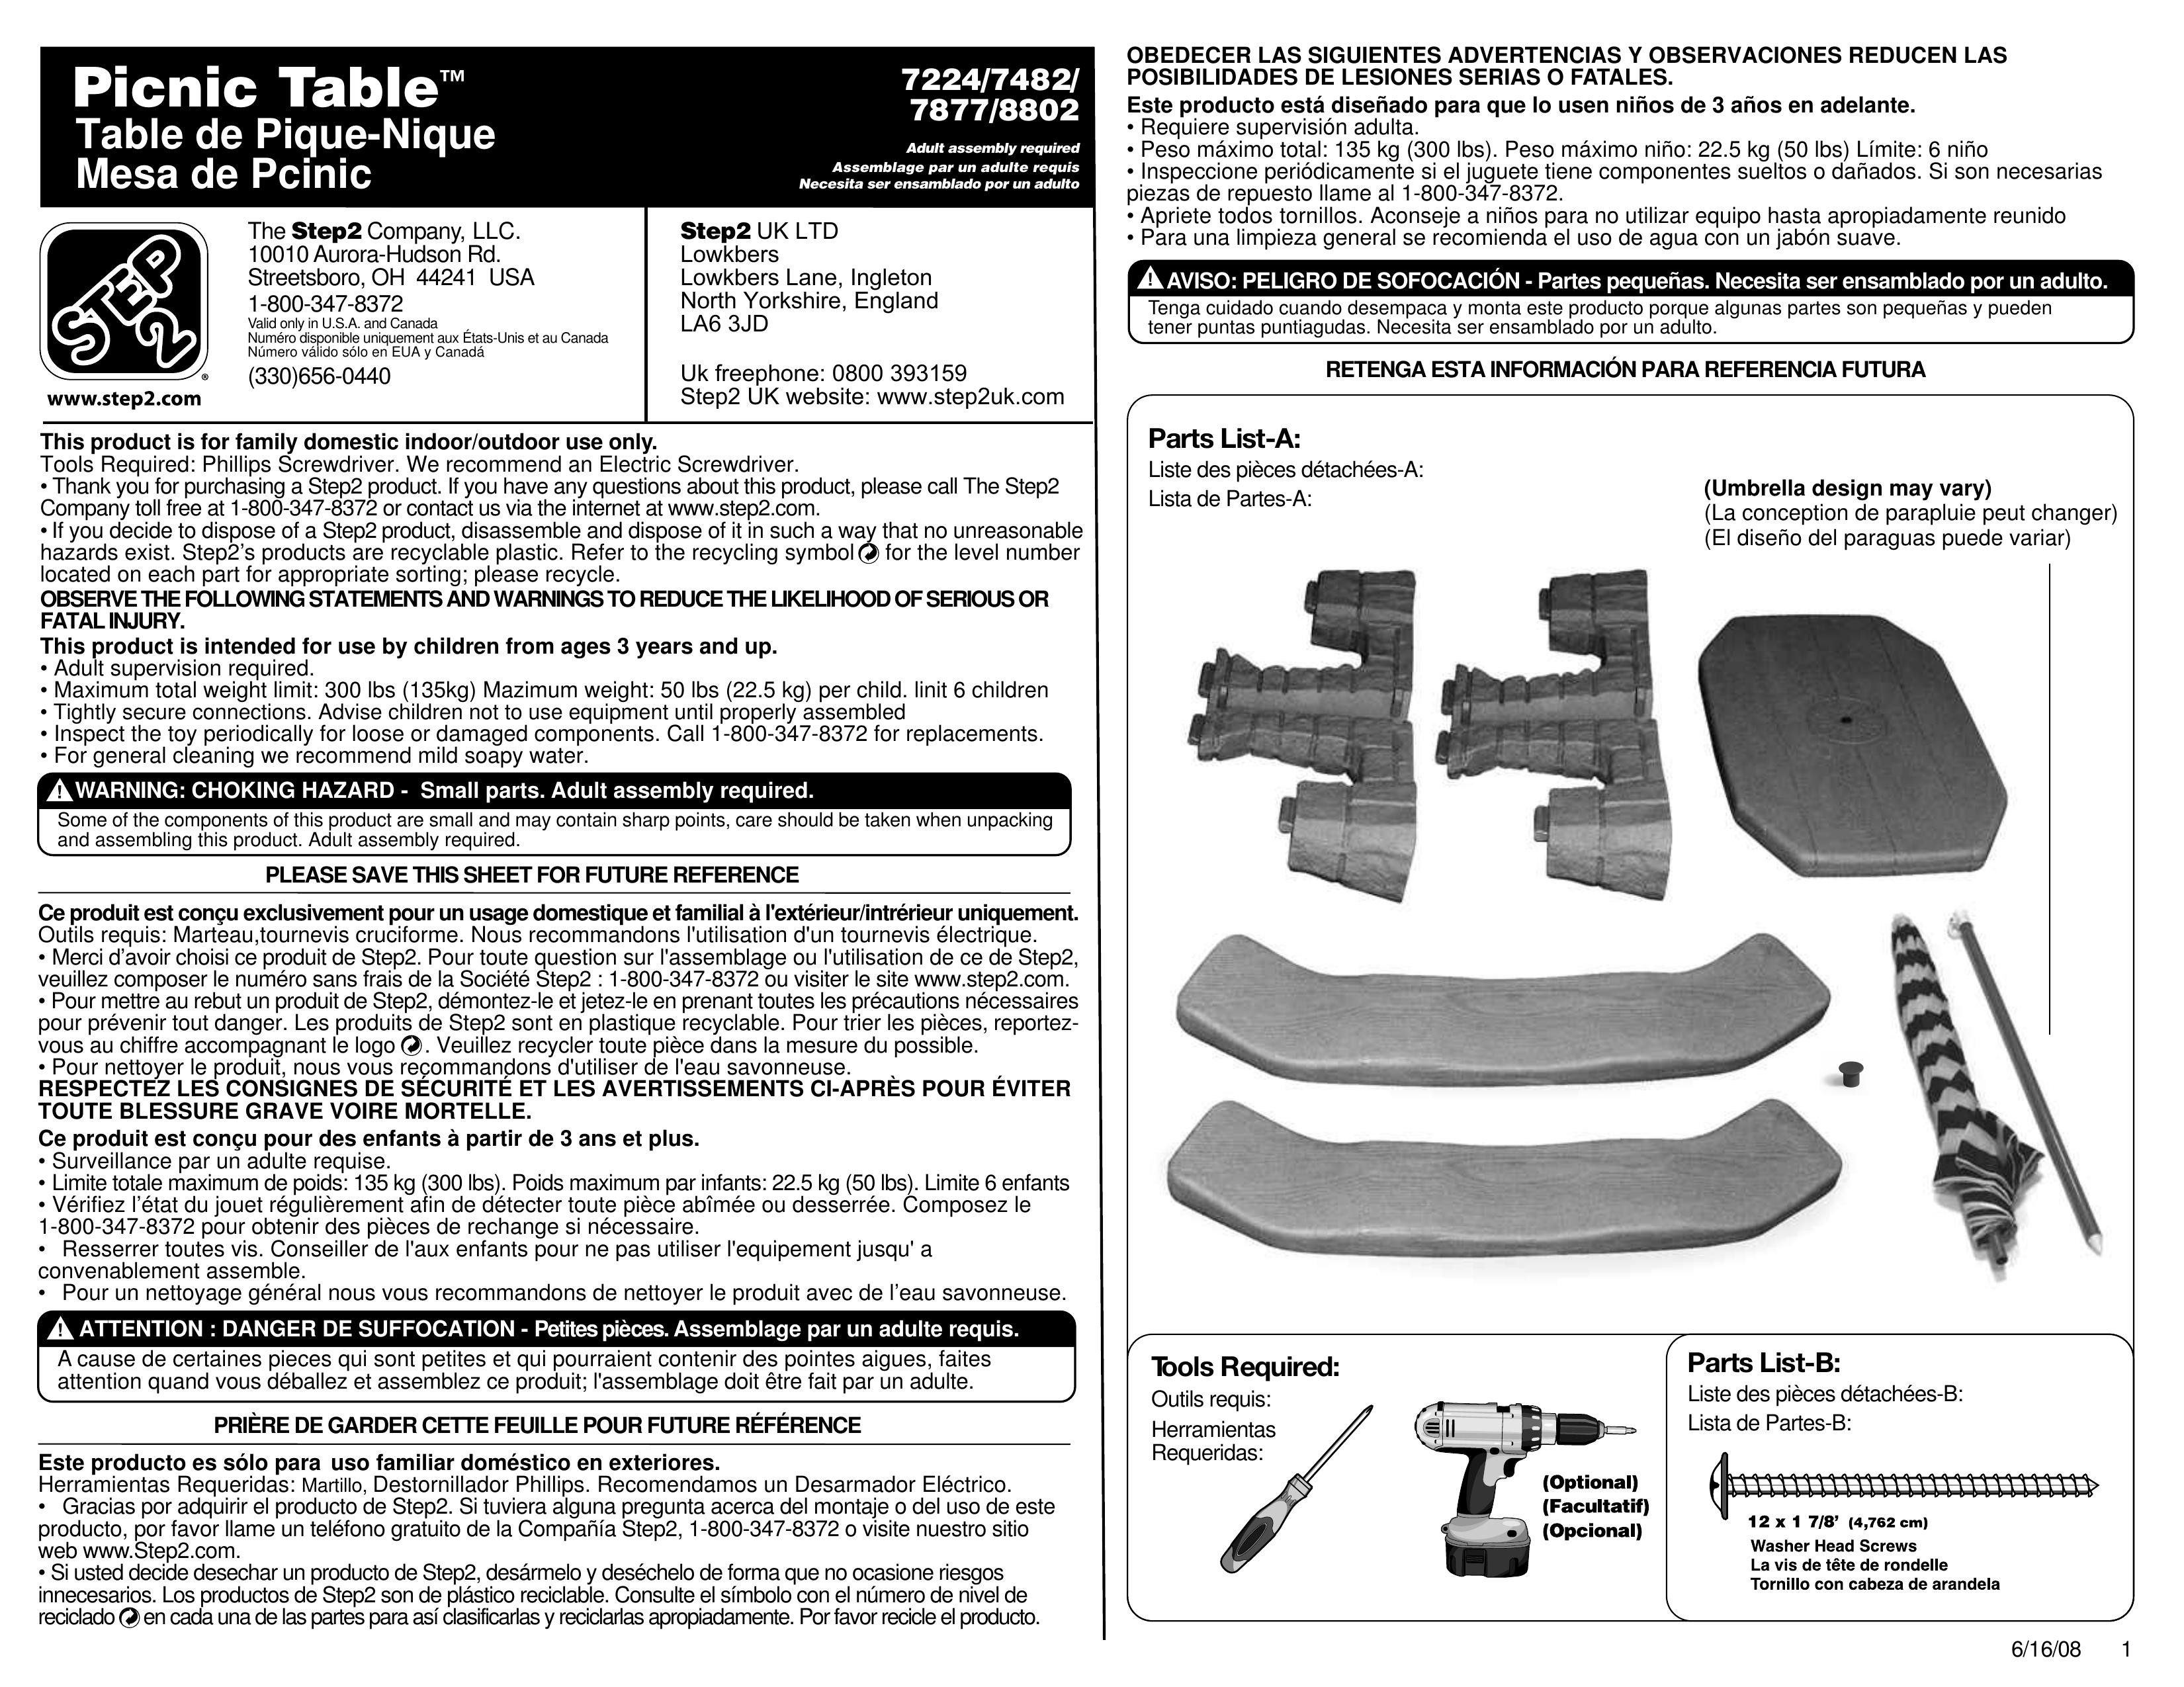 Step 2 7482 Picnic Table User Manual